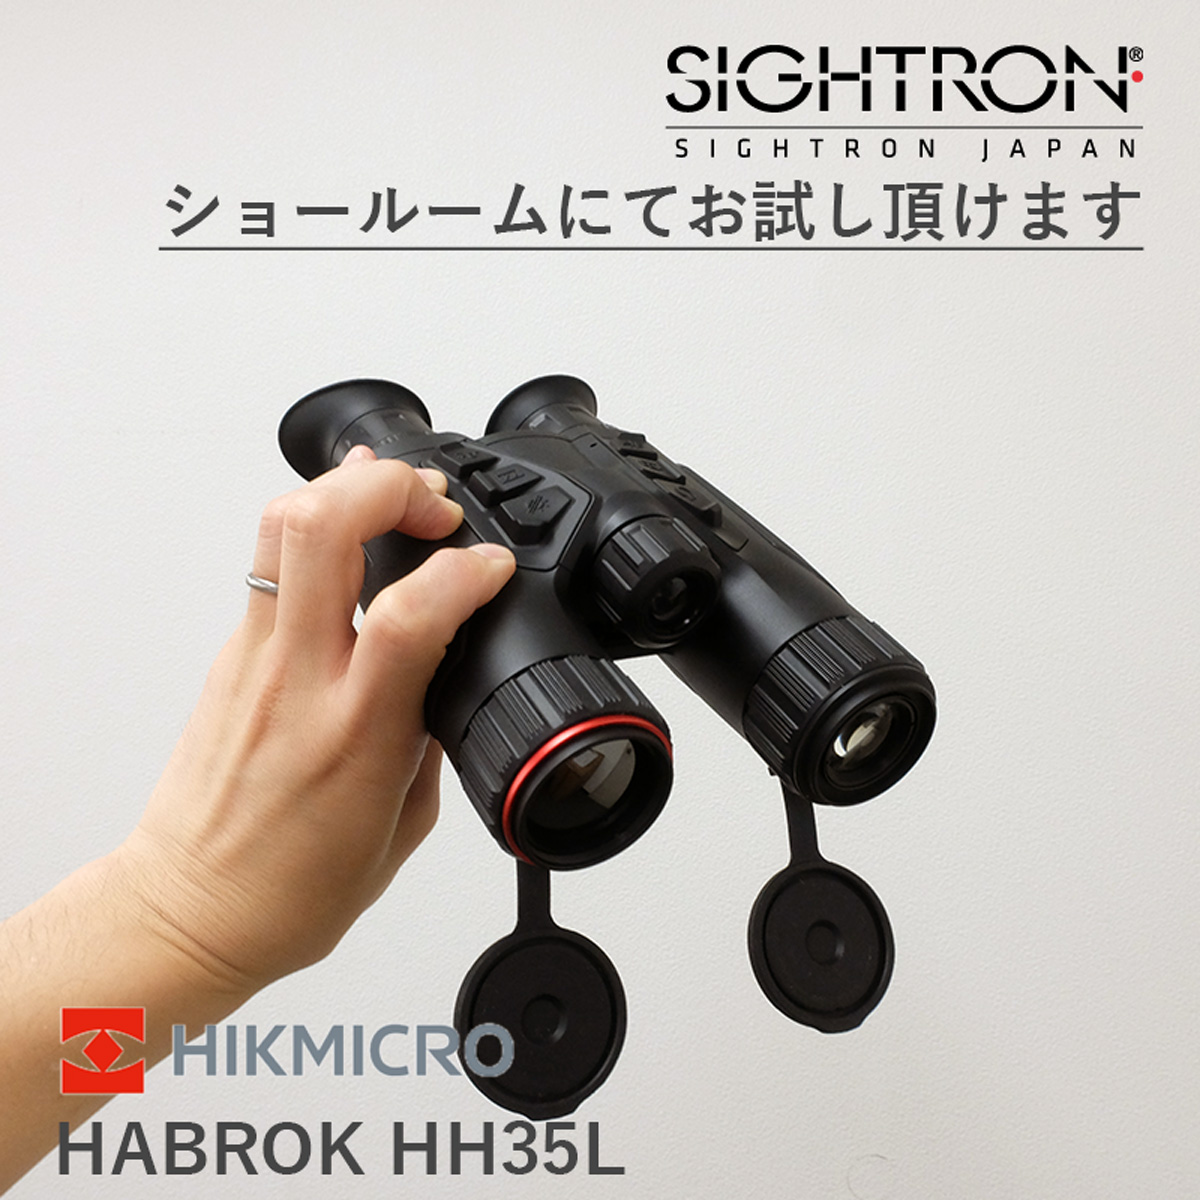 HIKMICRO サーマル・ナイトビジョンスコープ 双眼タイプ HABROK HH35L